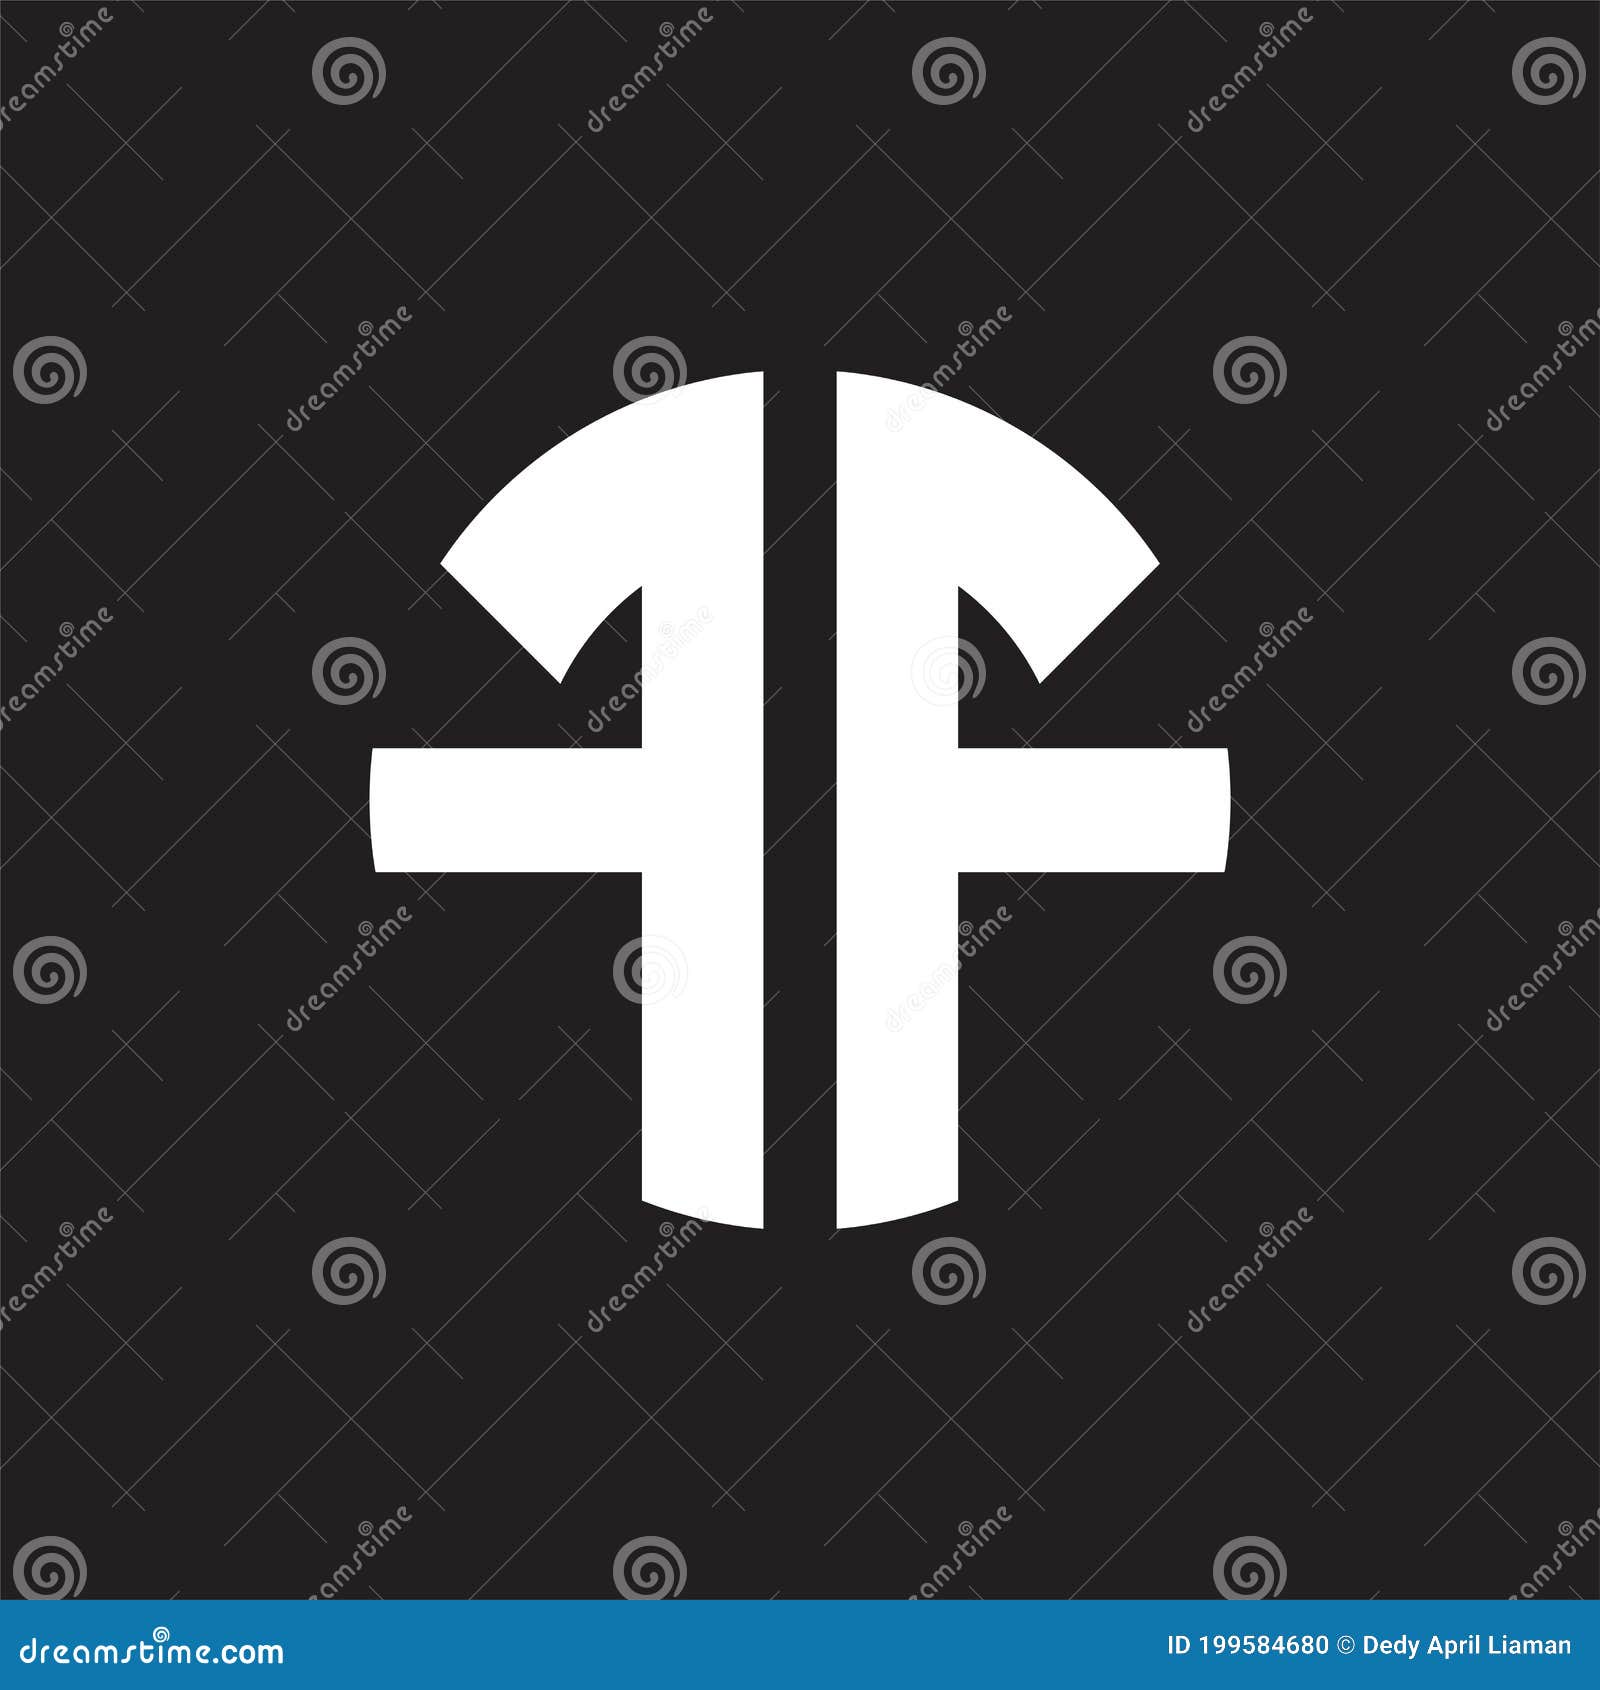 ff white logo   for profesional